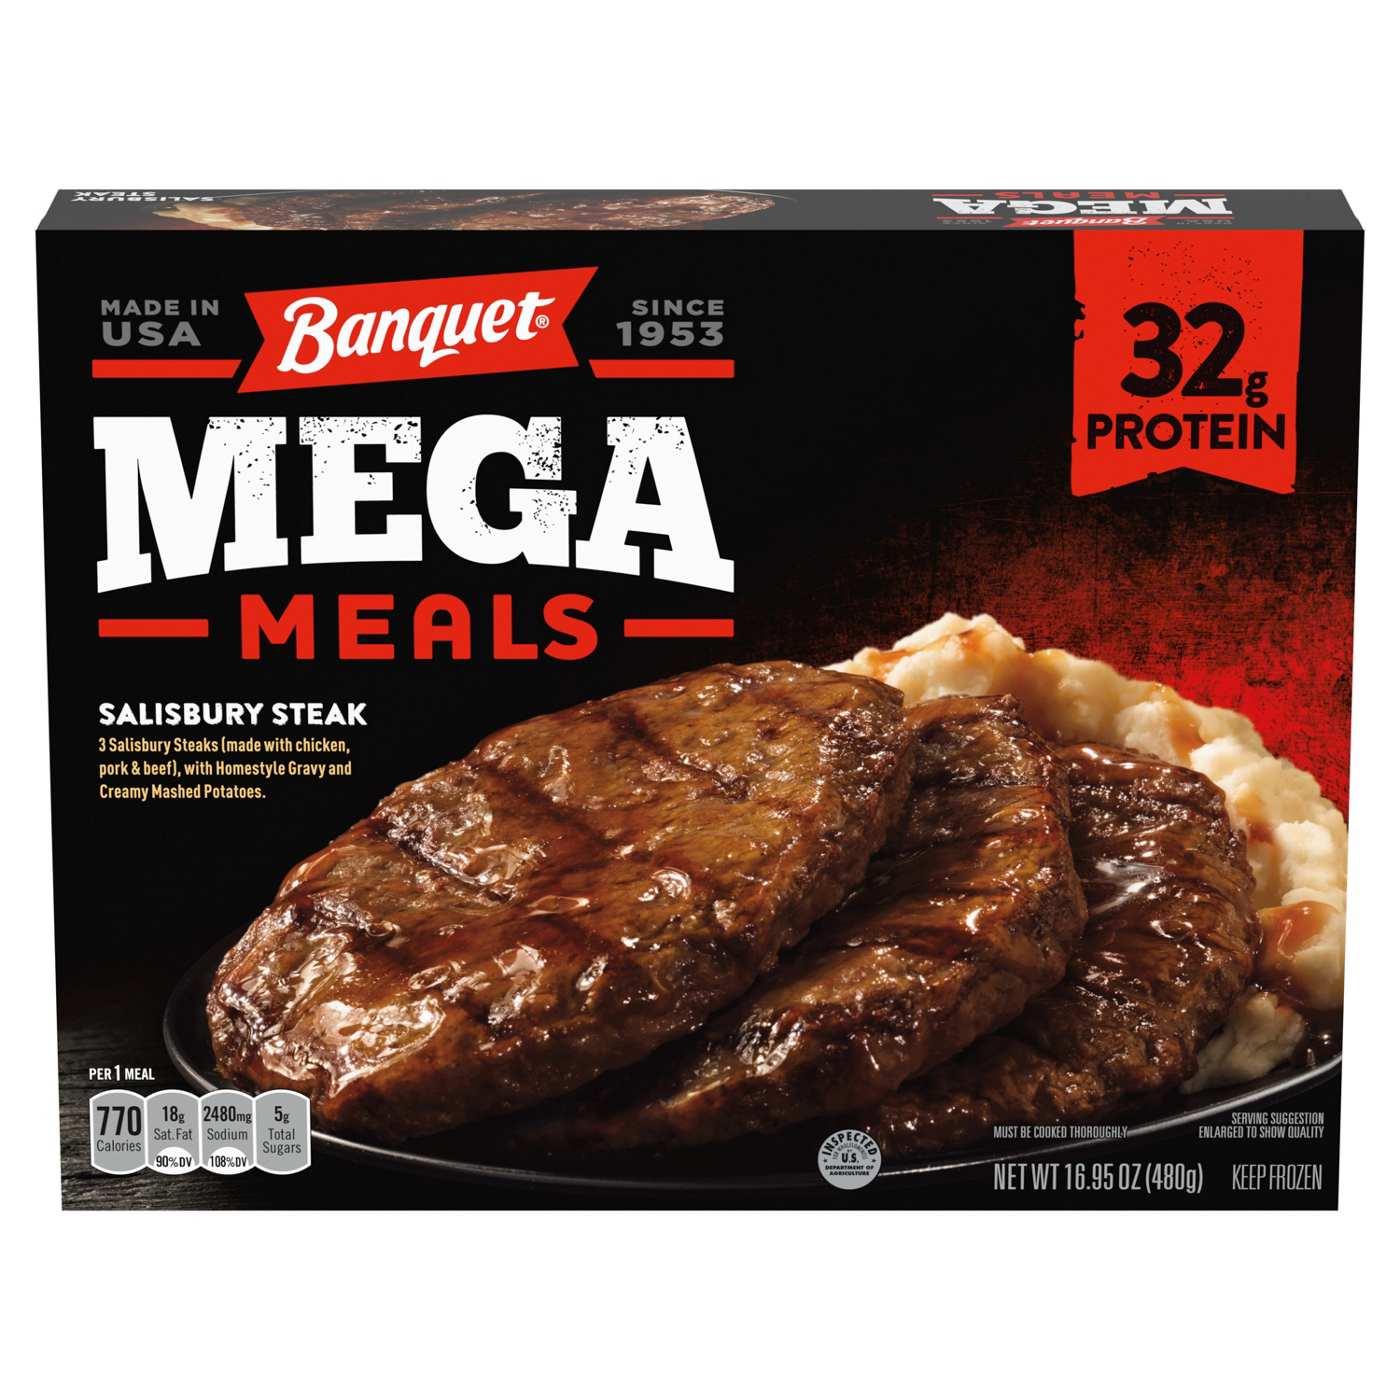 Banquet Mega Meals 32g Protein Salisbury Steak Frozen Meal; image 1 of 7